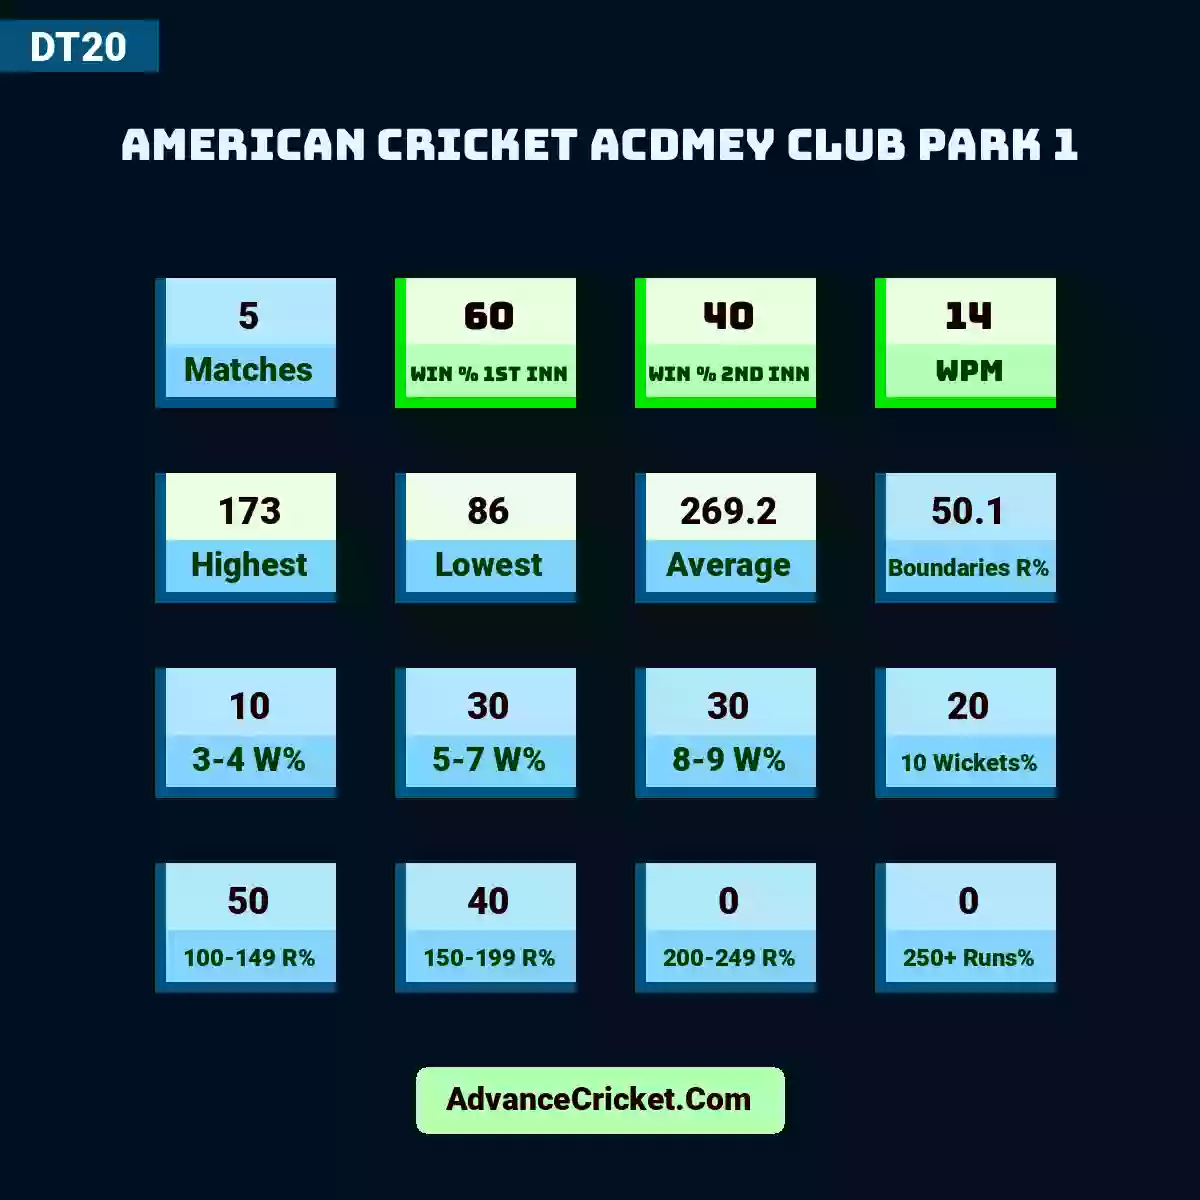 Image showing American Cricket Acdmey Club Park 1 with Matches: 5, Win % 1st Inn: 60, Win % 2nd Inn: 40, WPM: 14, Highest: 173, Lowest: 86, Average: 269.2, Boundaries R%: 50.1, 3-4 W%: 10, 5-7 W%: 30, 8-9 W%: 30, 10 Wickets%: 20, 100-149 R%: 50, 150-199 R%: 40, 200-249 R%: 0, 250+ Runs%: 0.